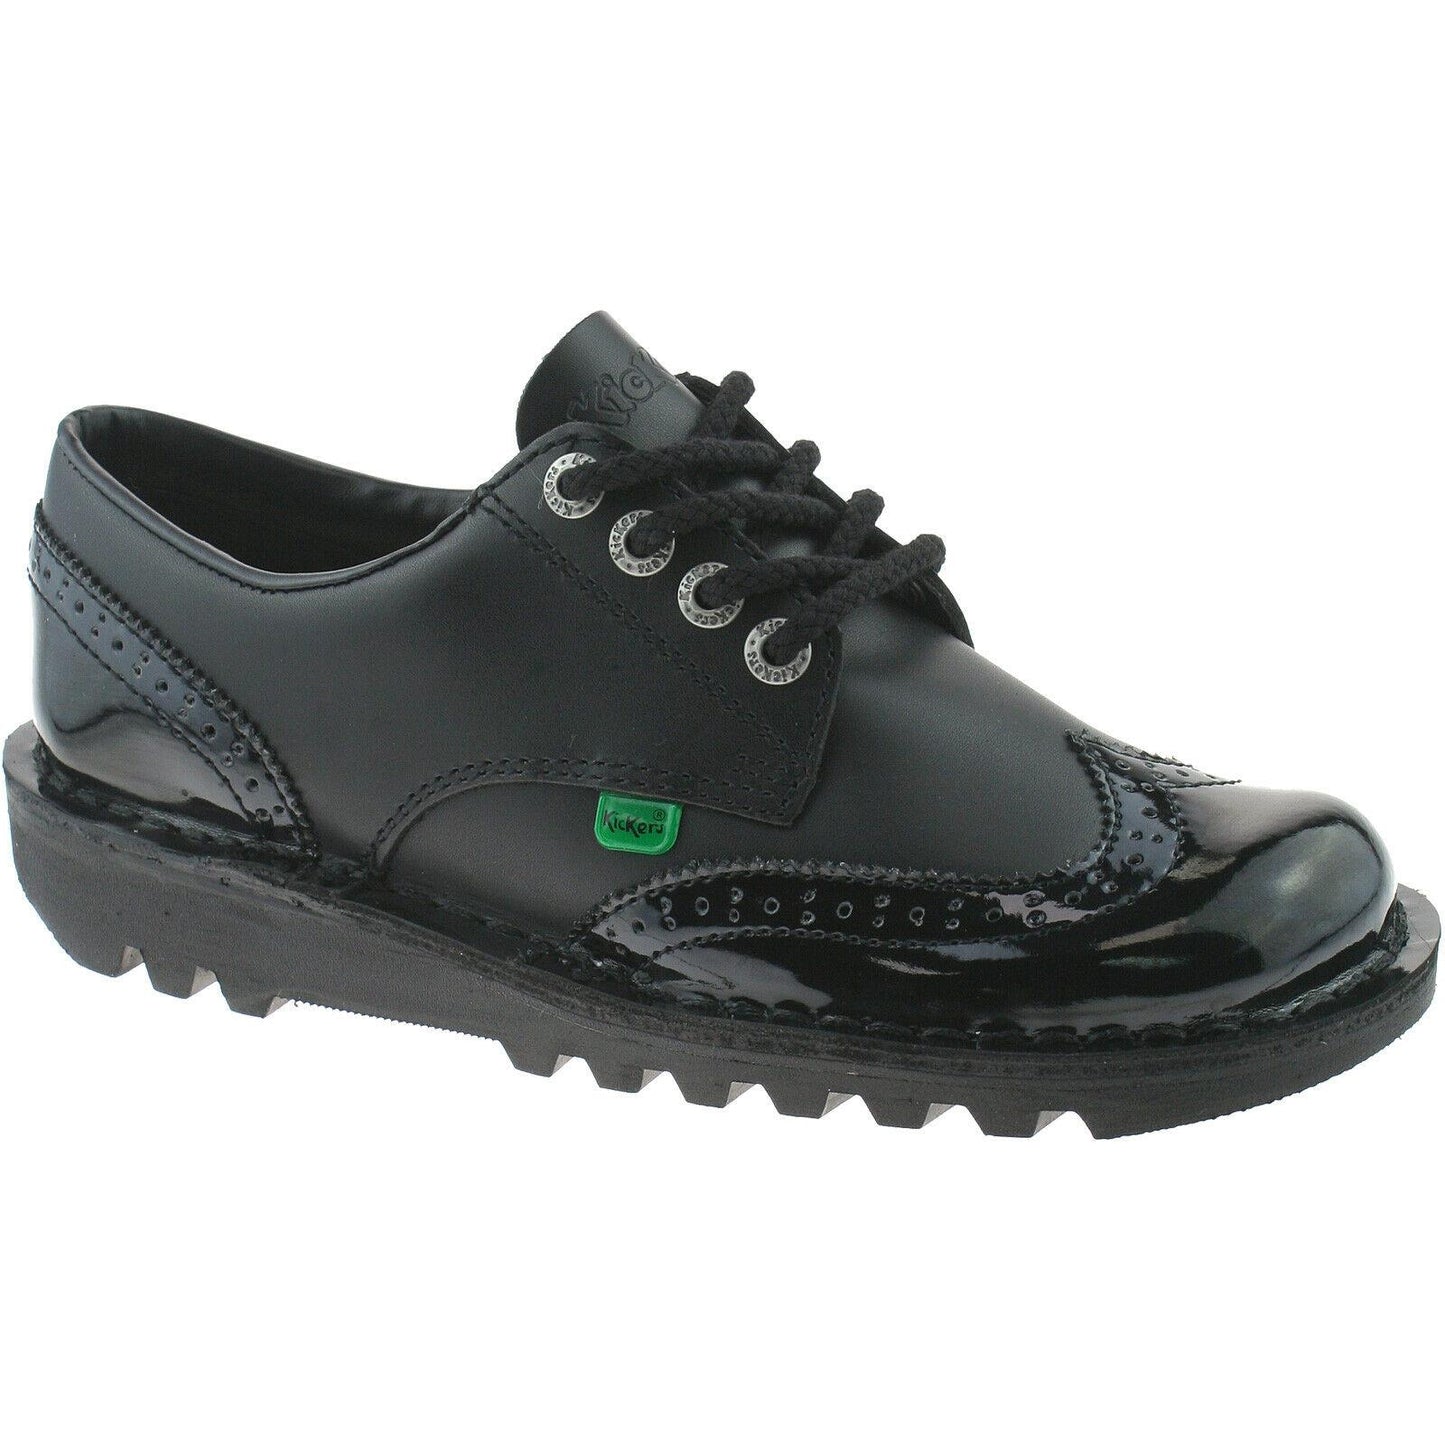 Ladies Kickers Kick Lo Brogue Core Black Patent Leather School Shoes 1-10689